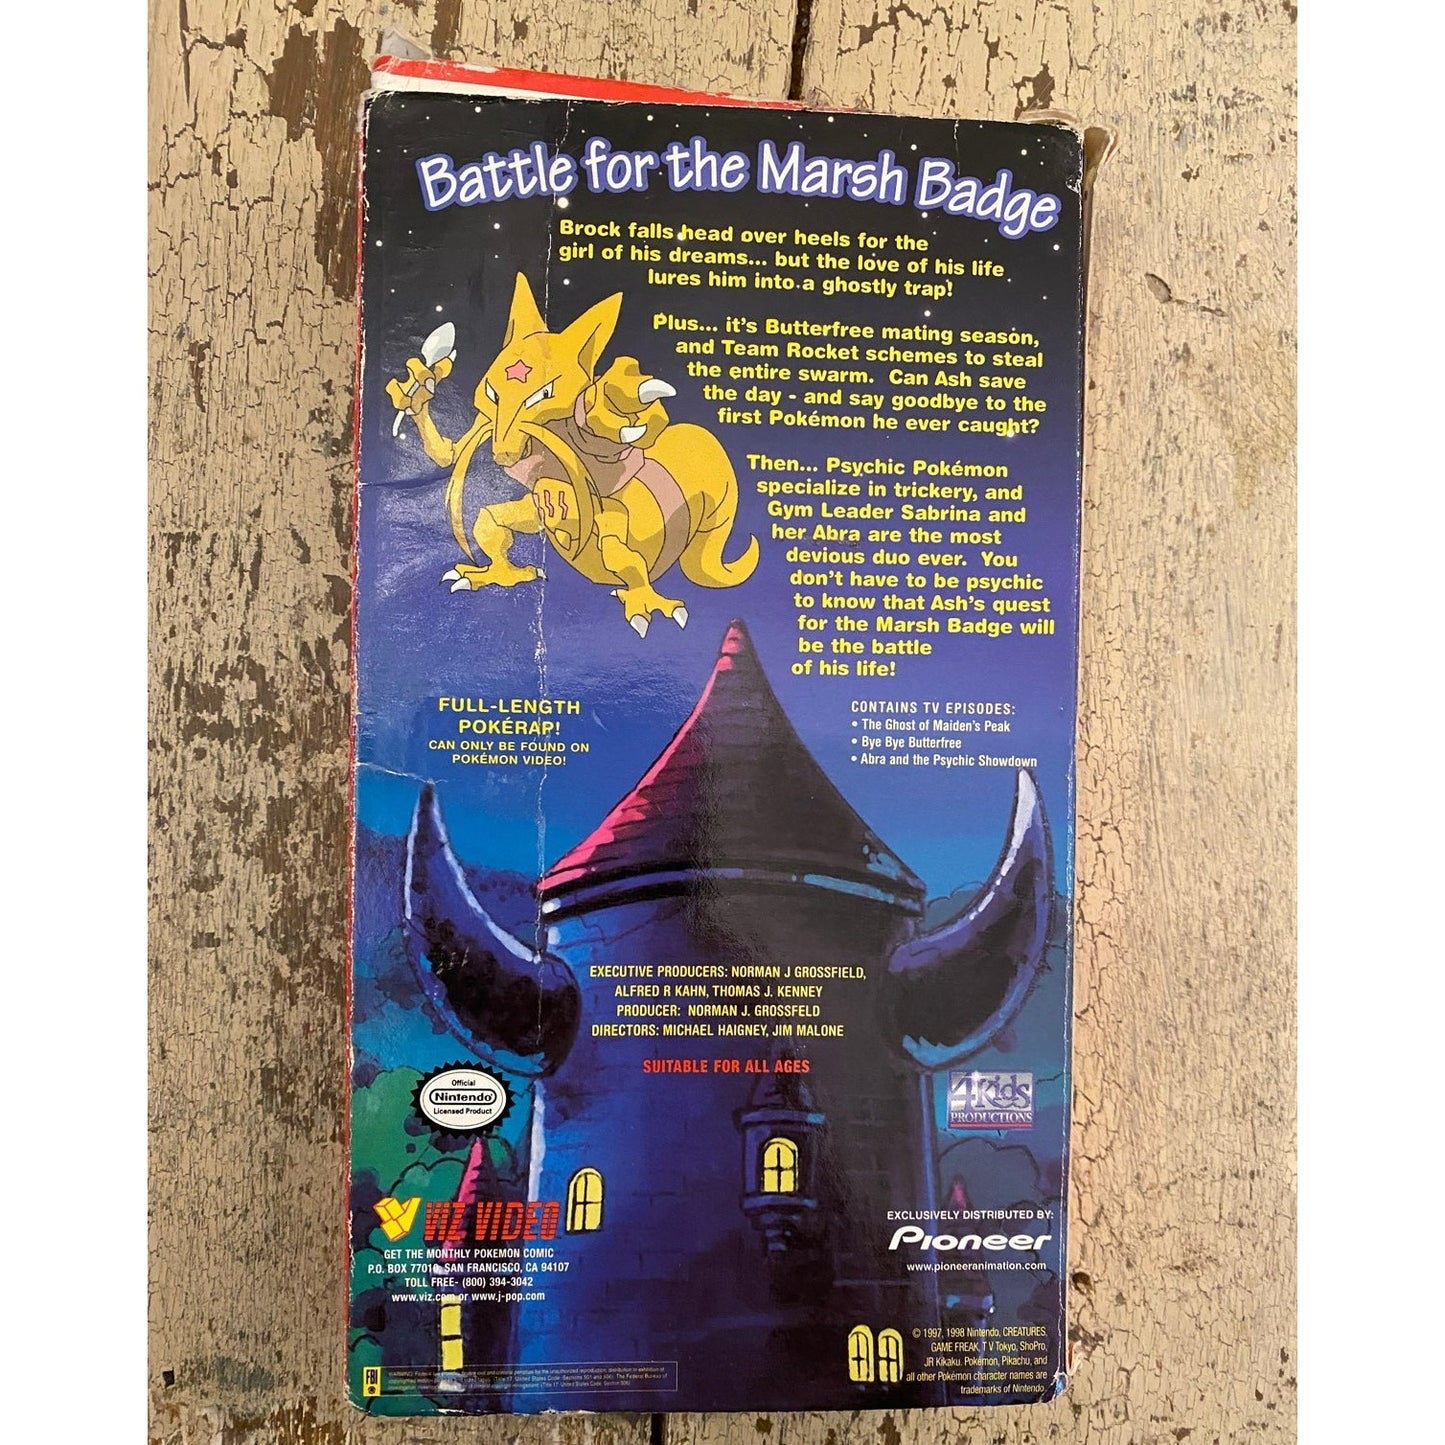 Pokémon Psychic Surprise vintage VHS